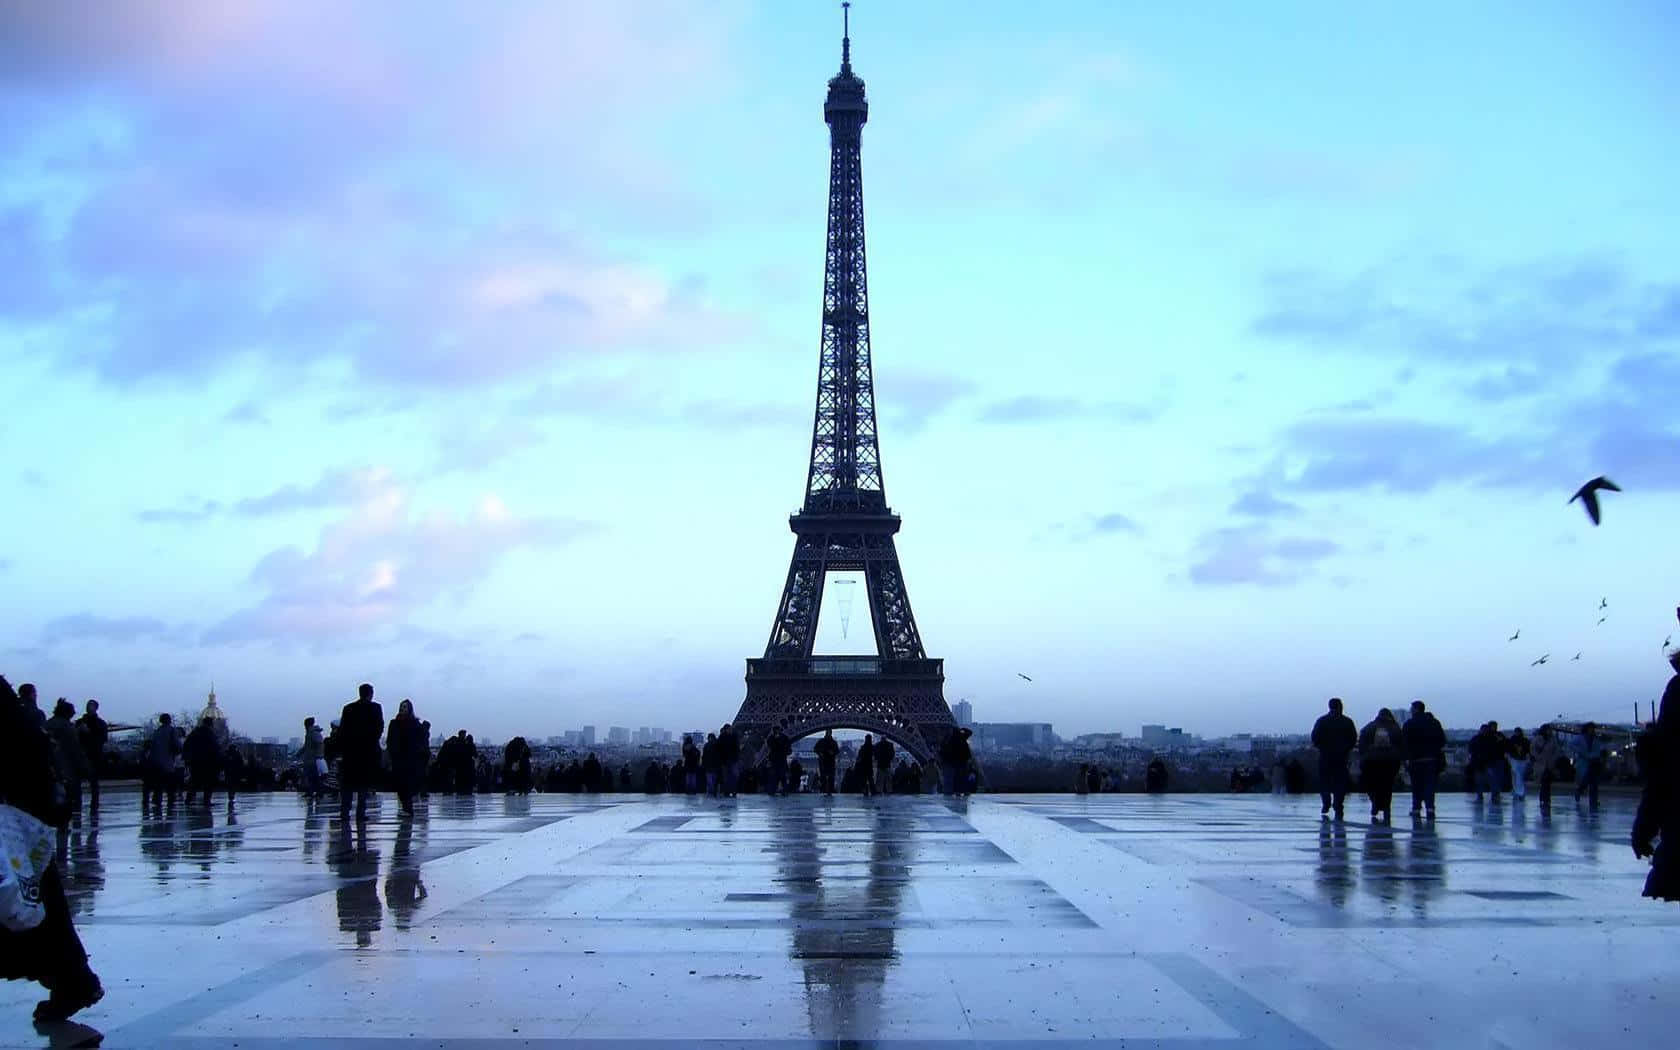 Feel the romantic ambiance at Eiffel Tower, the iconic Parisian landmark